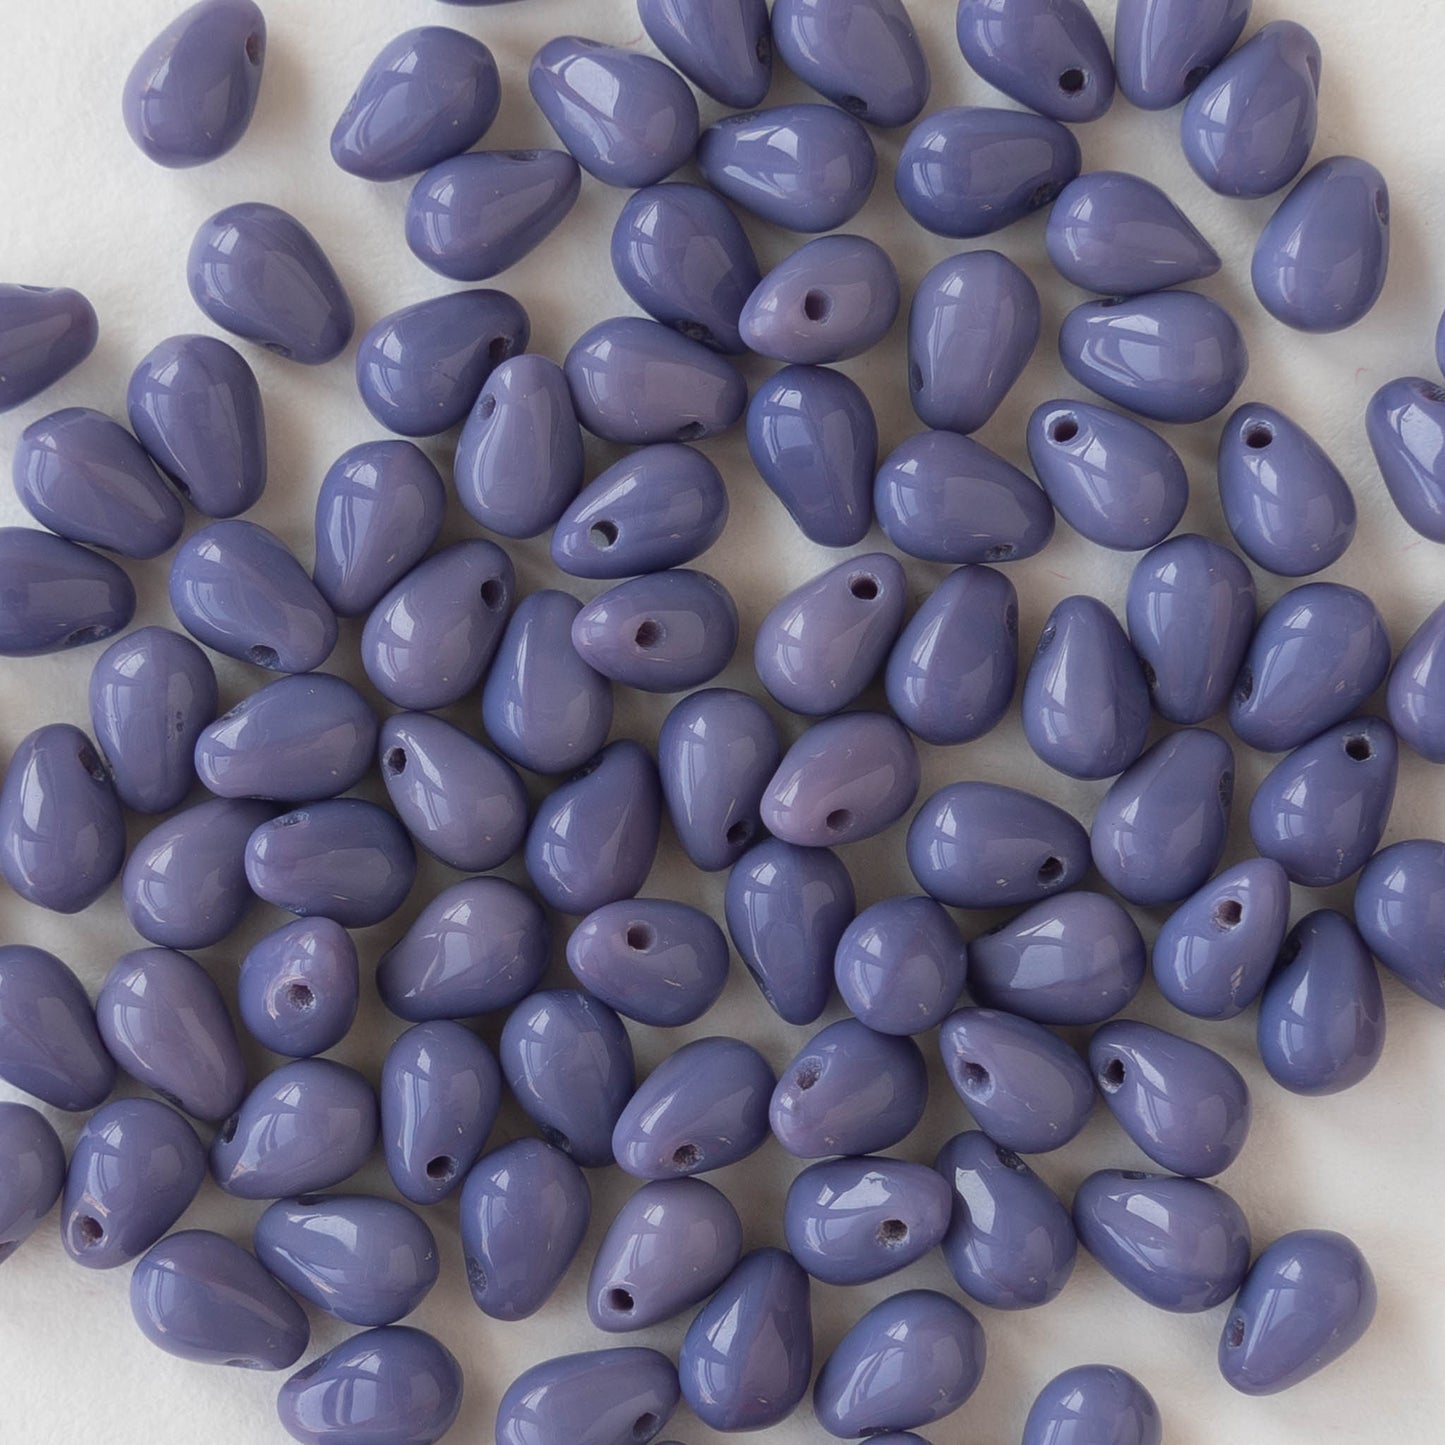 4x6mm Glass Teardrop Beads - Opaque Purple - 100 Beads